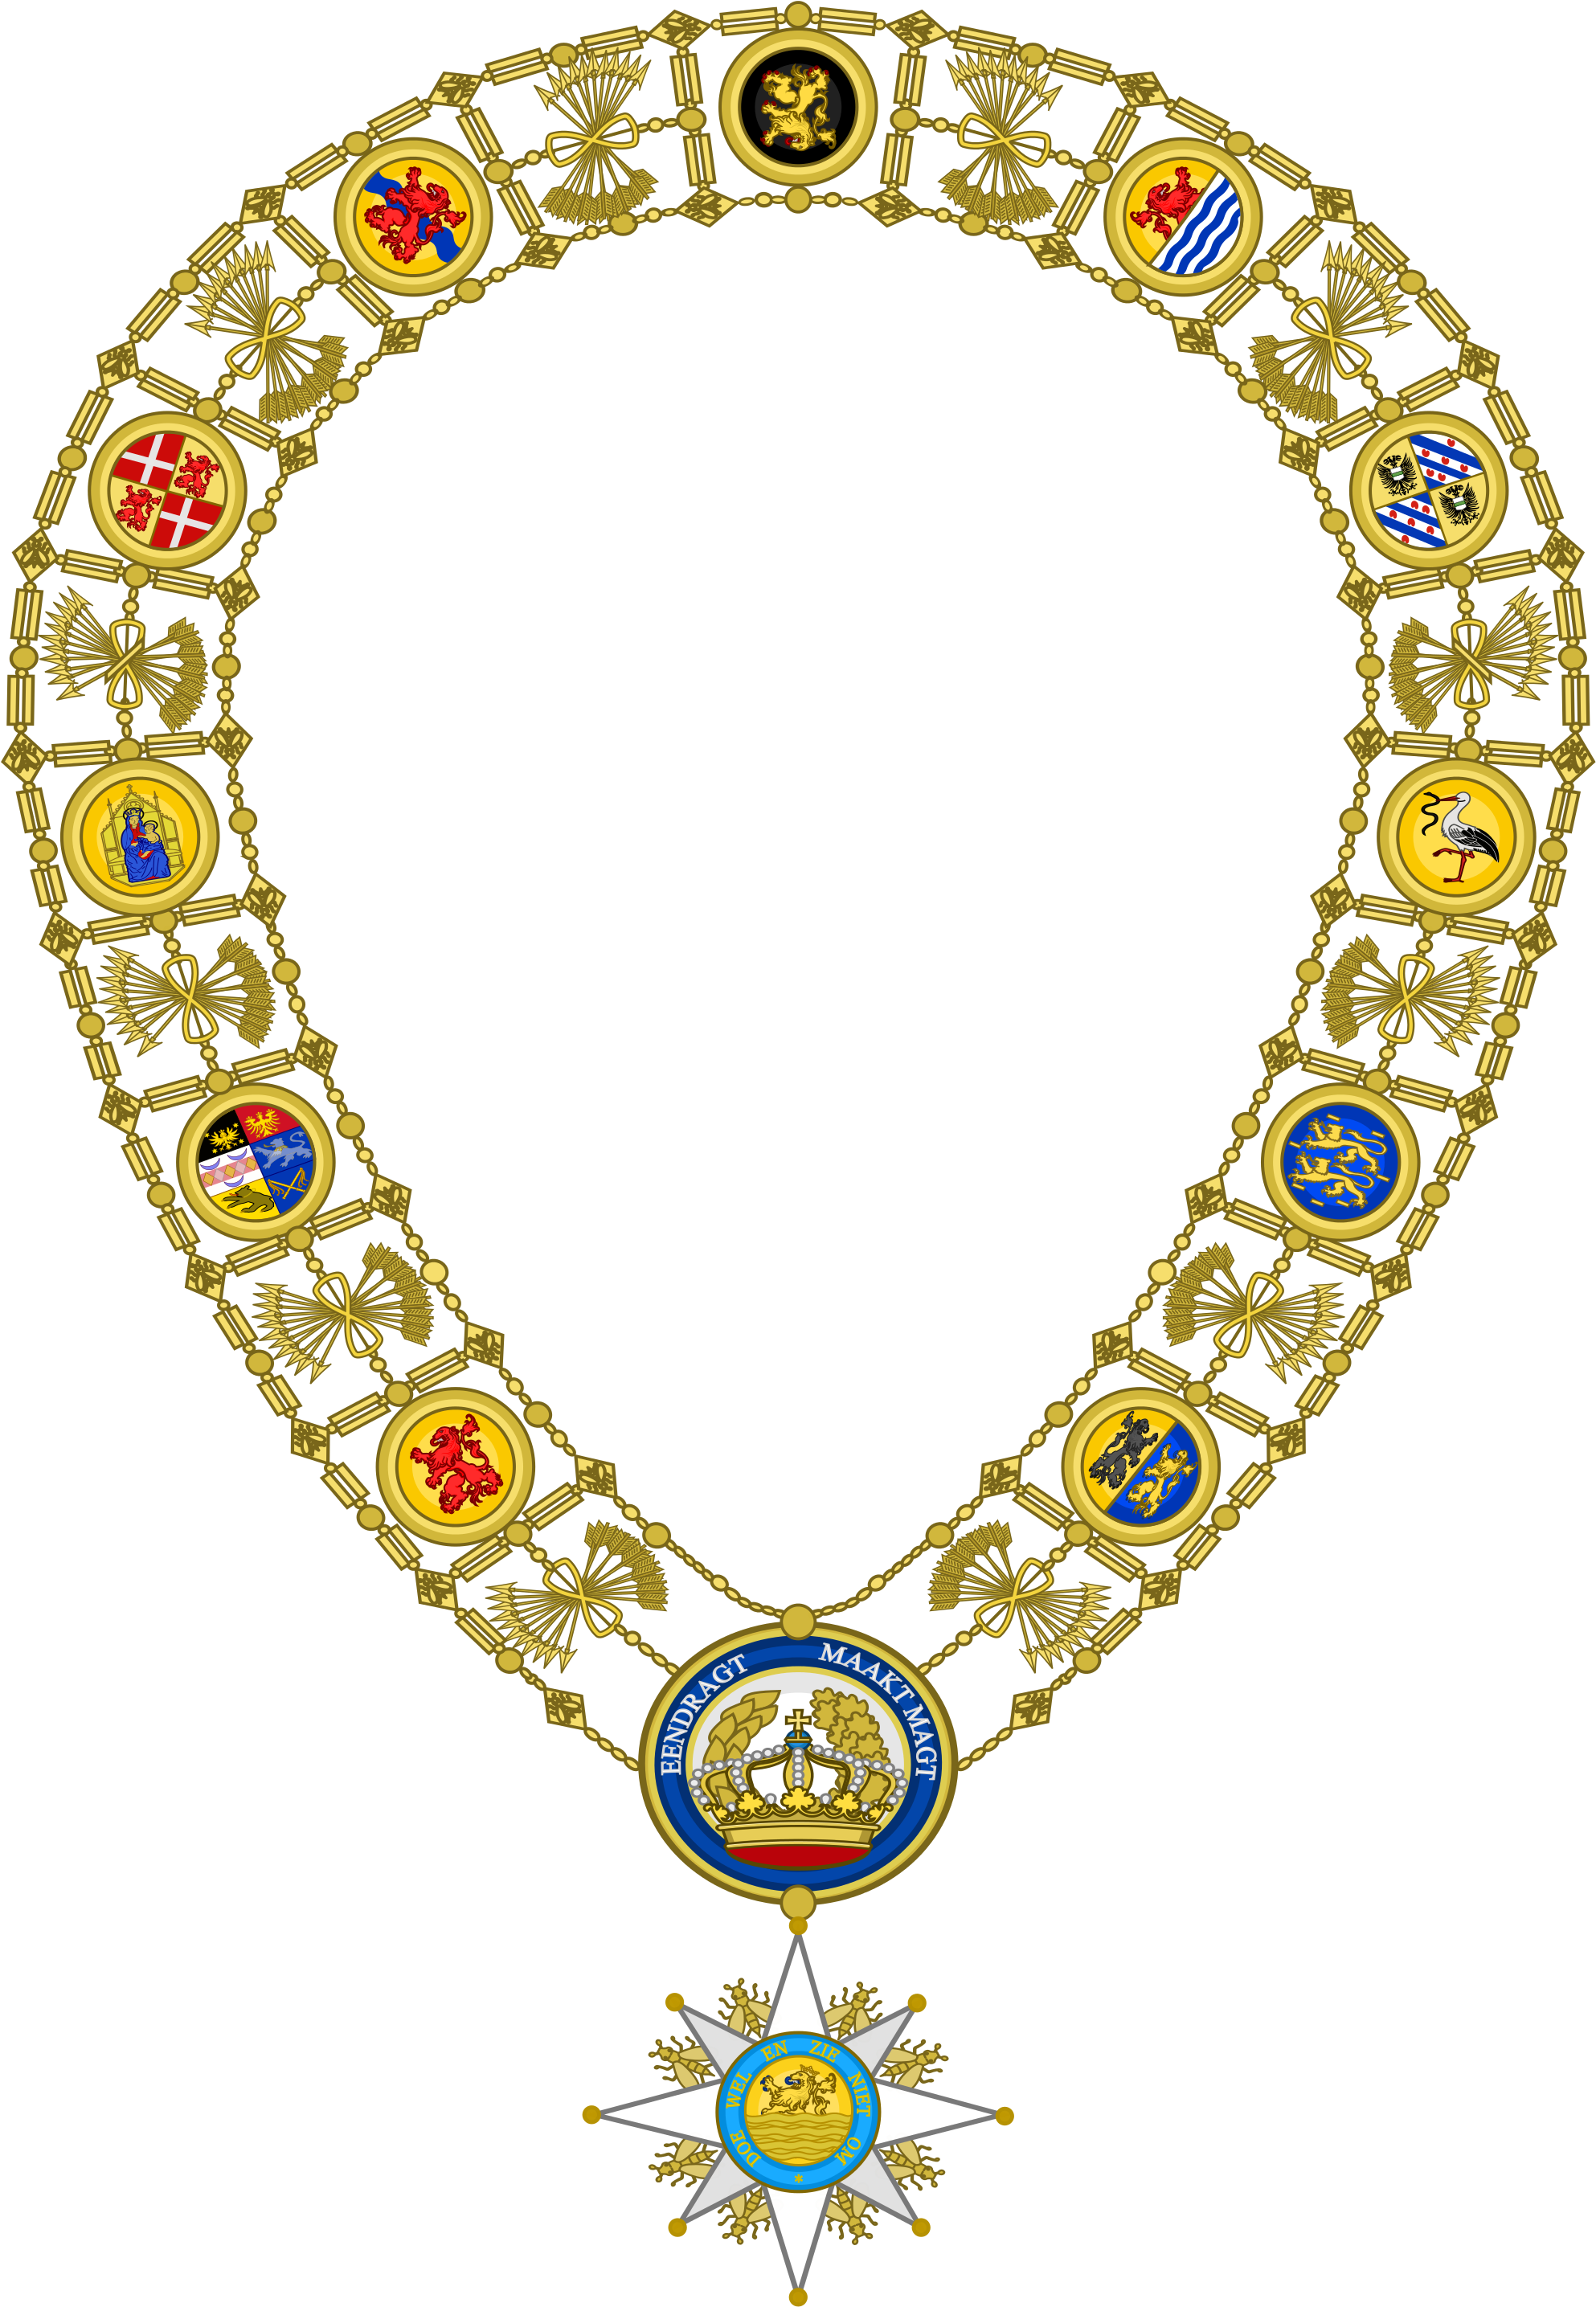 File Orde Van De Unie Wikimedia Commons - Order Of The Union (2000x2887)